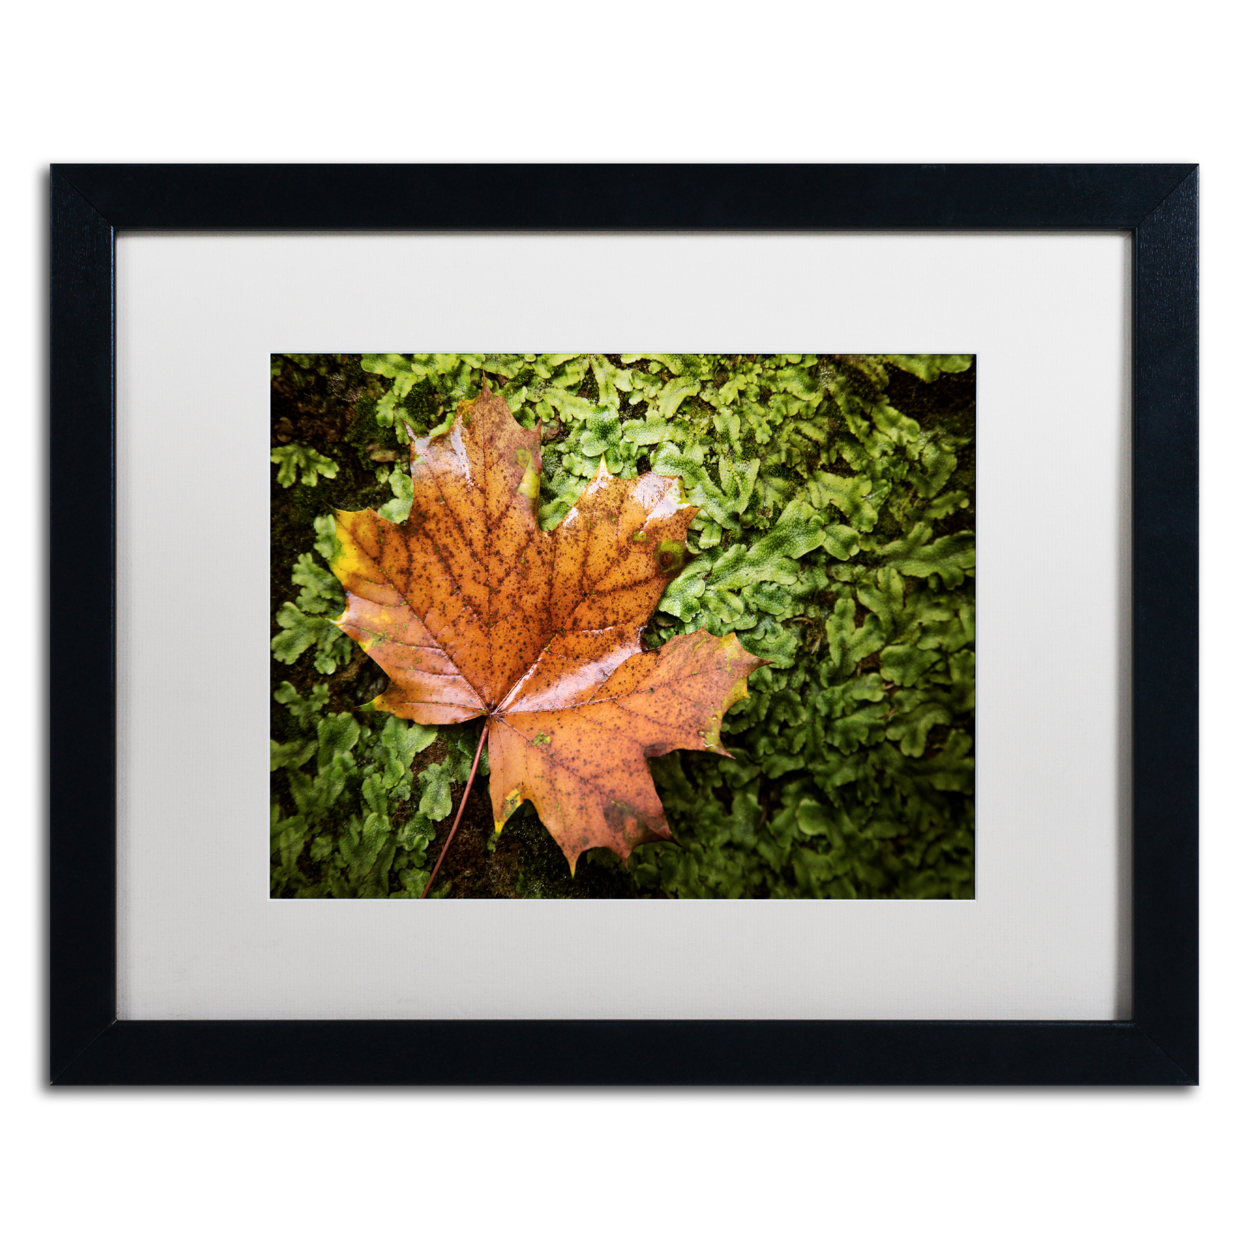 Jason Shaffer 'Maple Moss' Black Wooden Framed Art 18 X 22 Inches